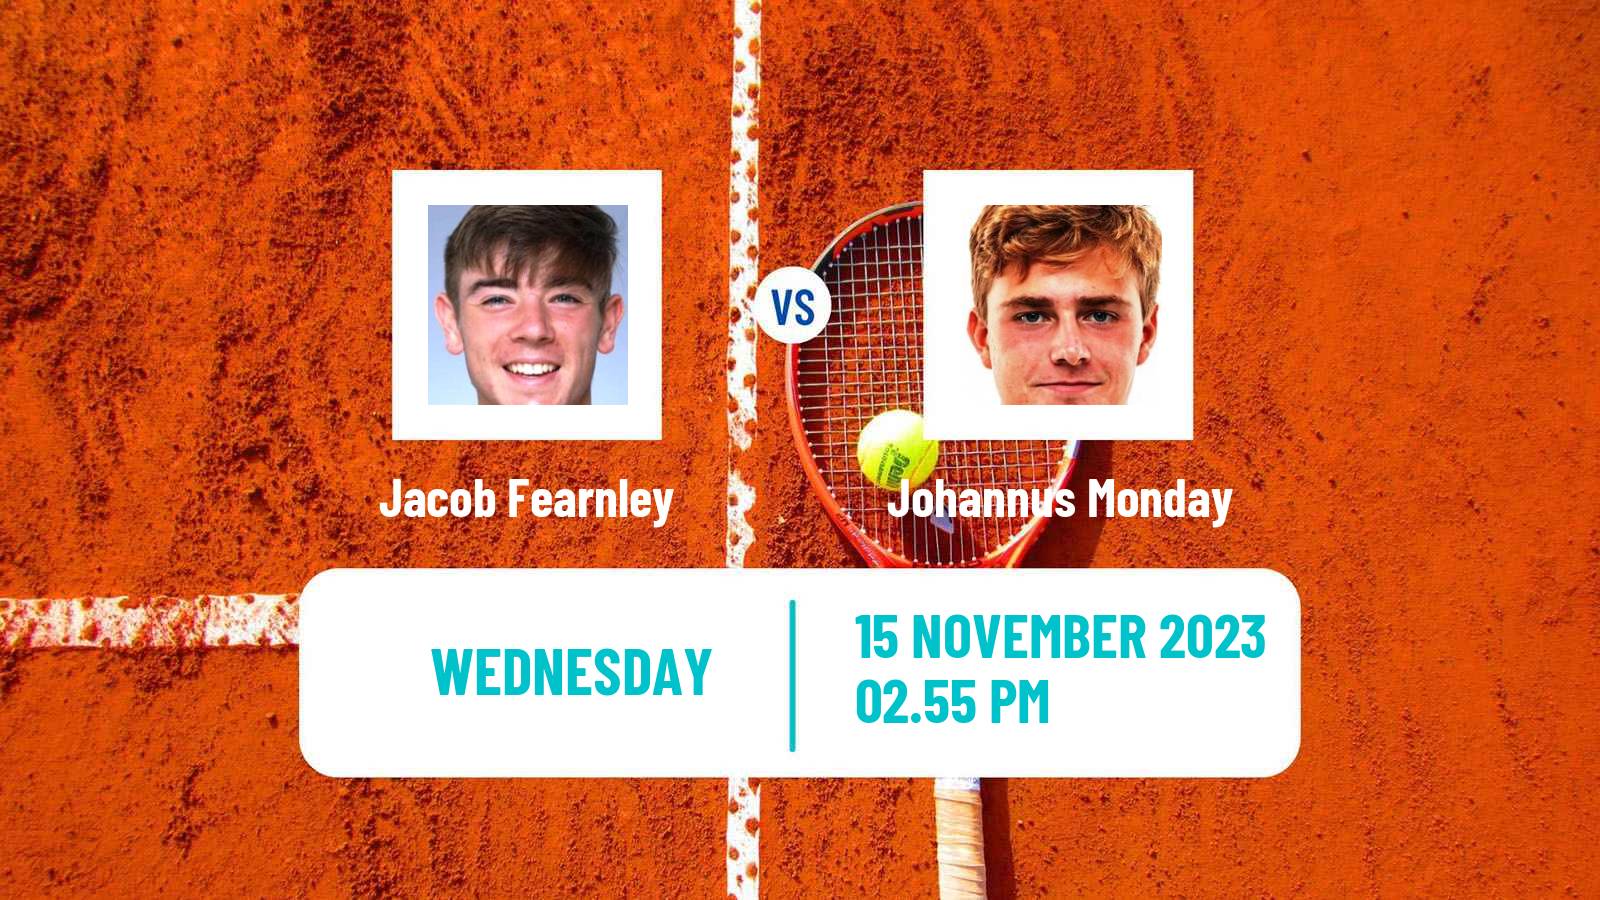 Tennis ITF M25 Columbus Oh Men Jacob Fearnley - Johannus Monday